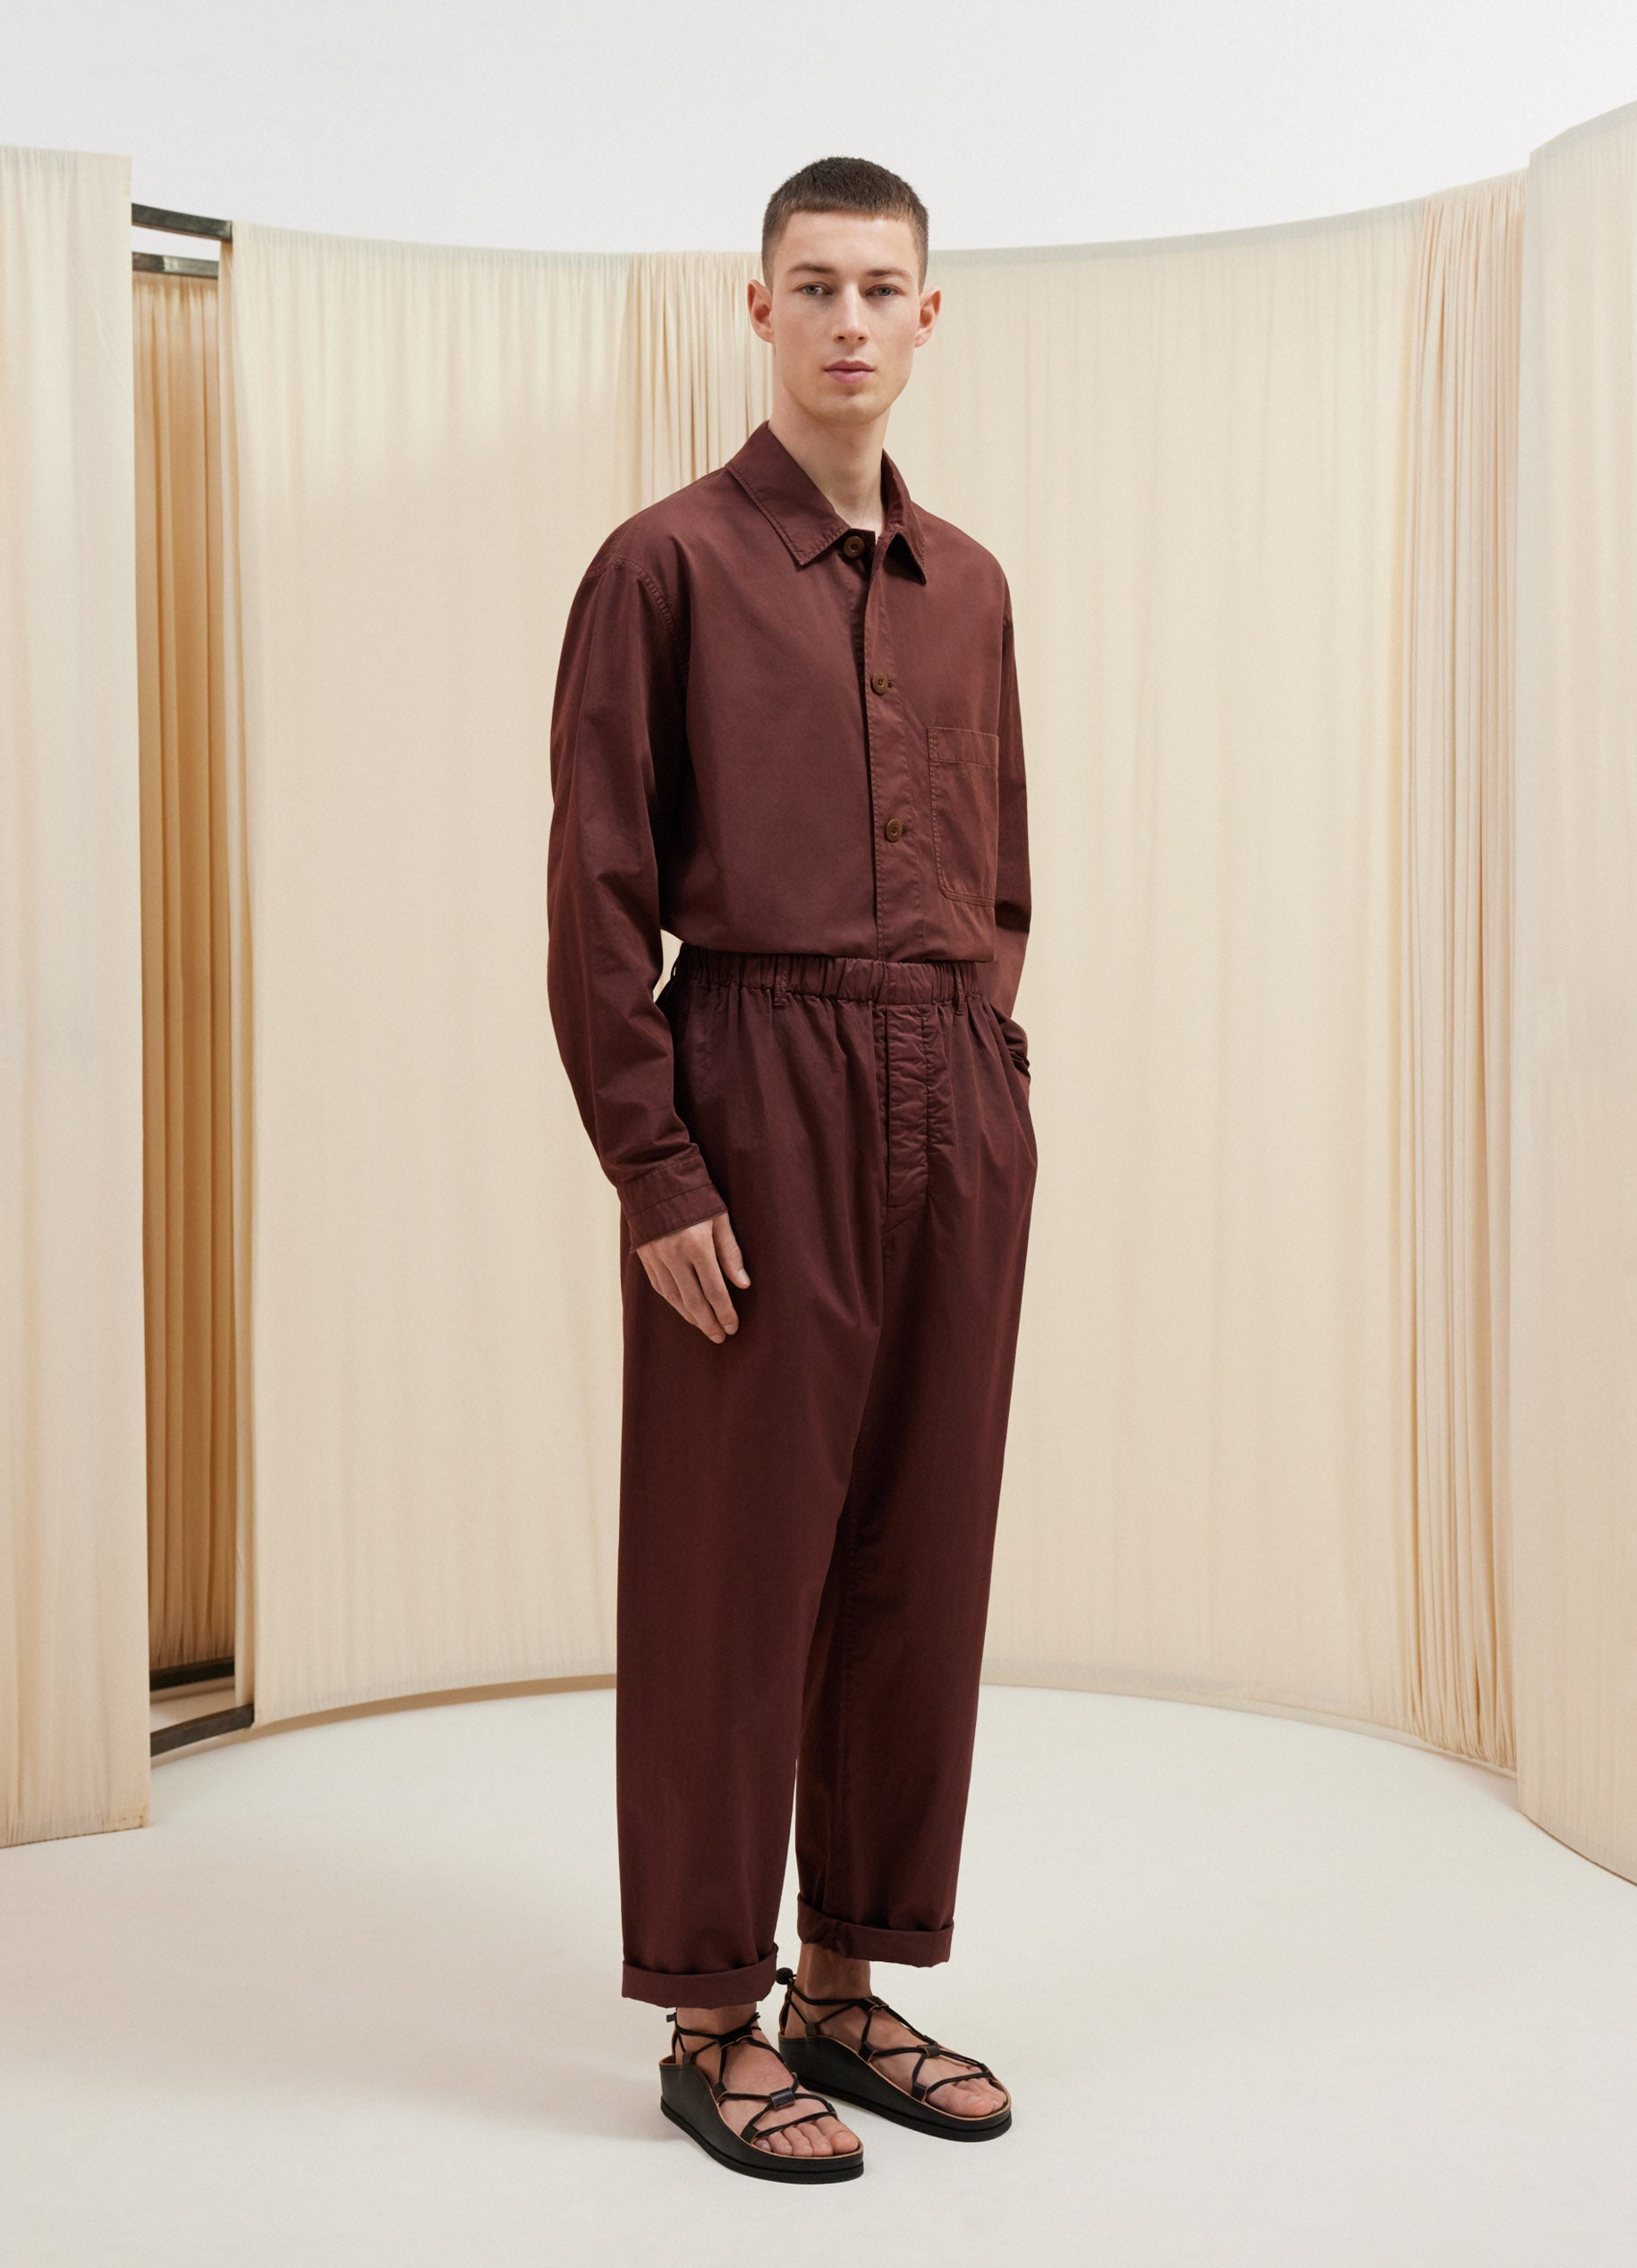 Lemaire: Black Curved 5 Pockets Pants, Men's Designer Clothes